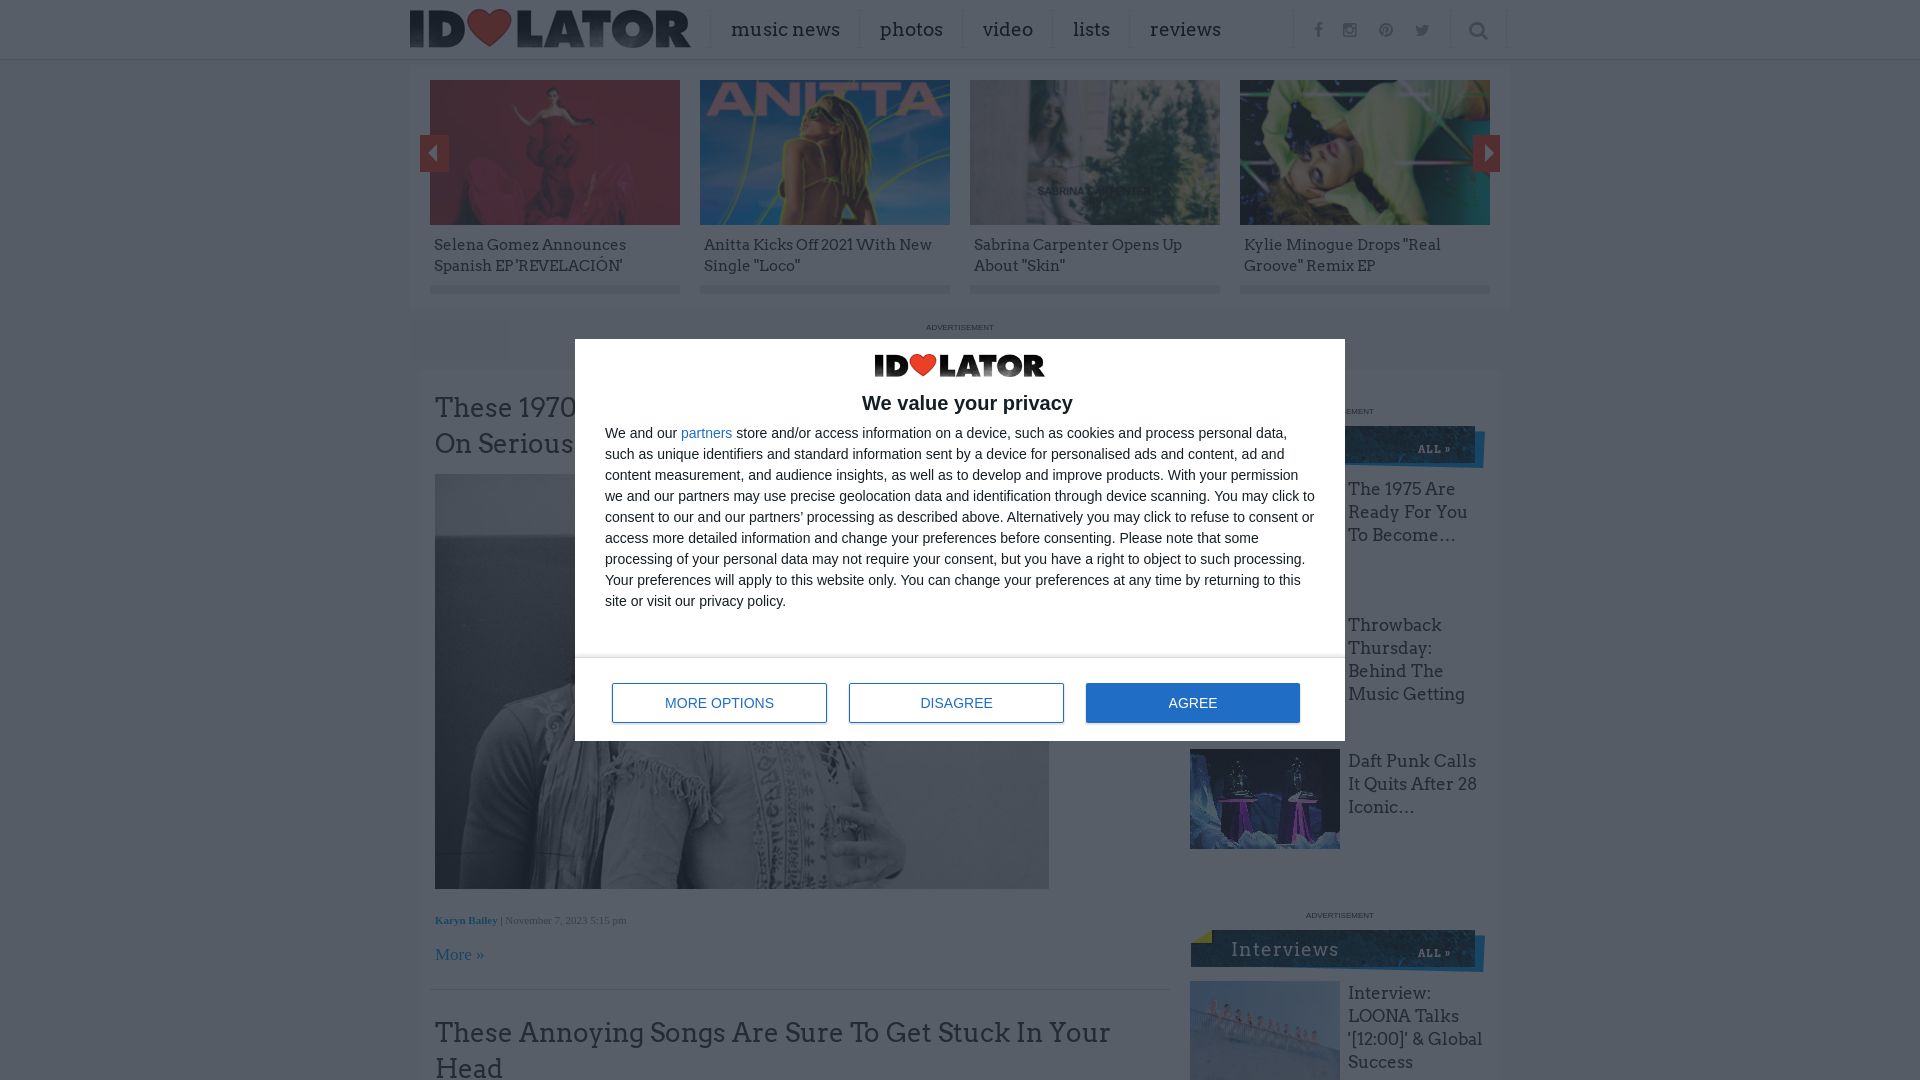 Website status idolator.com is   ONLINE